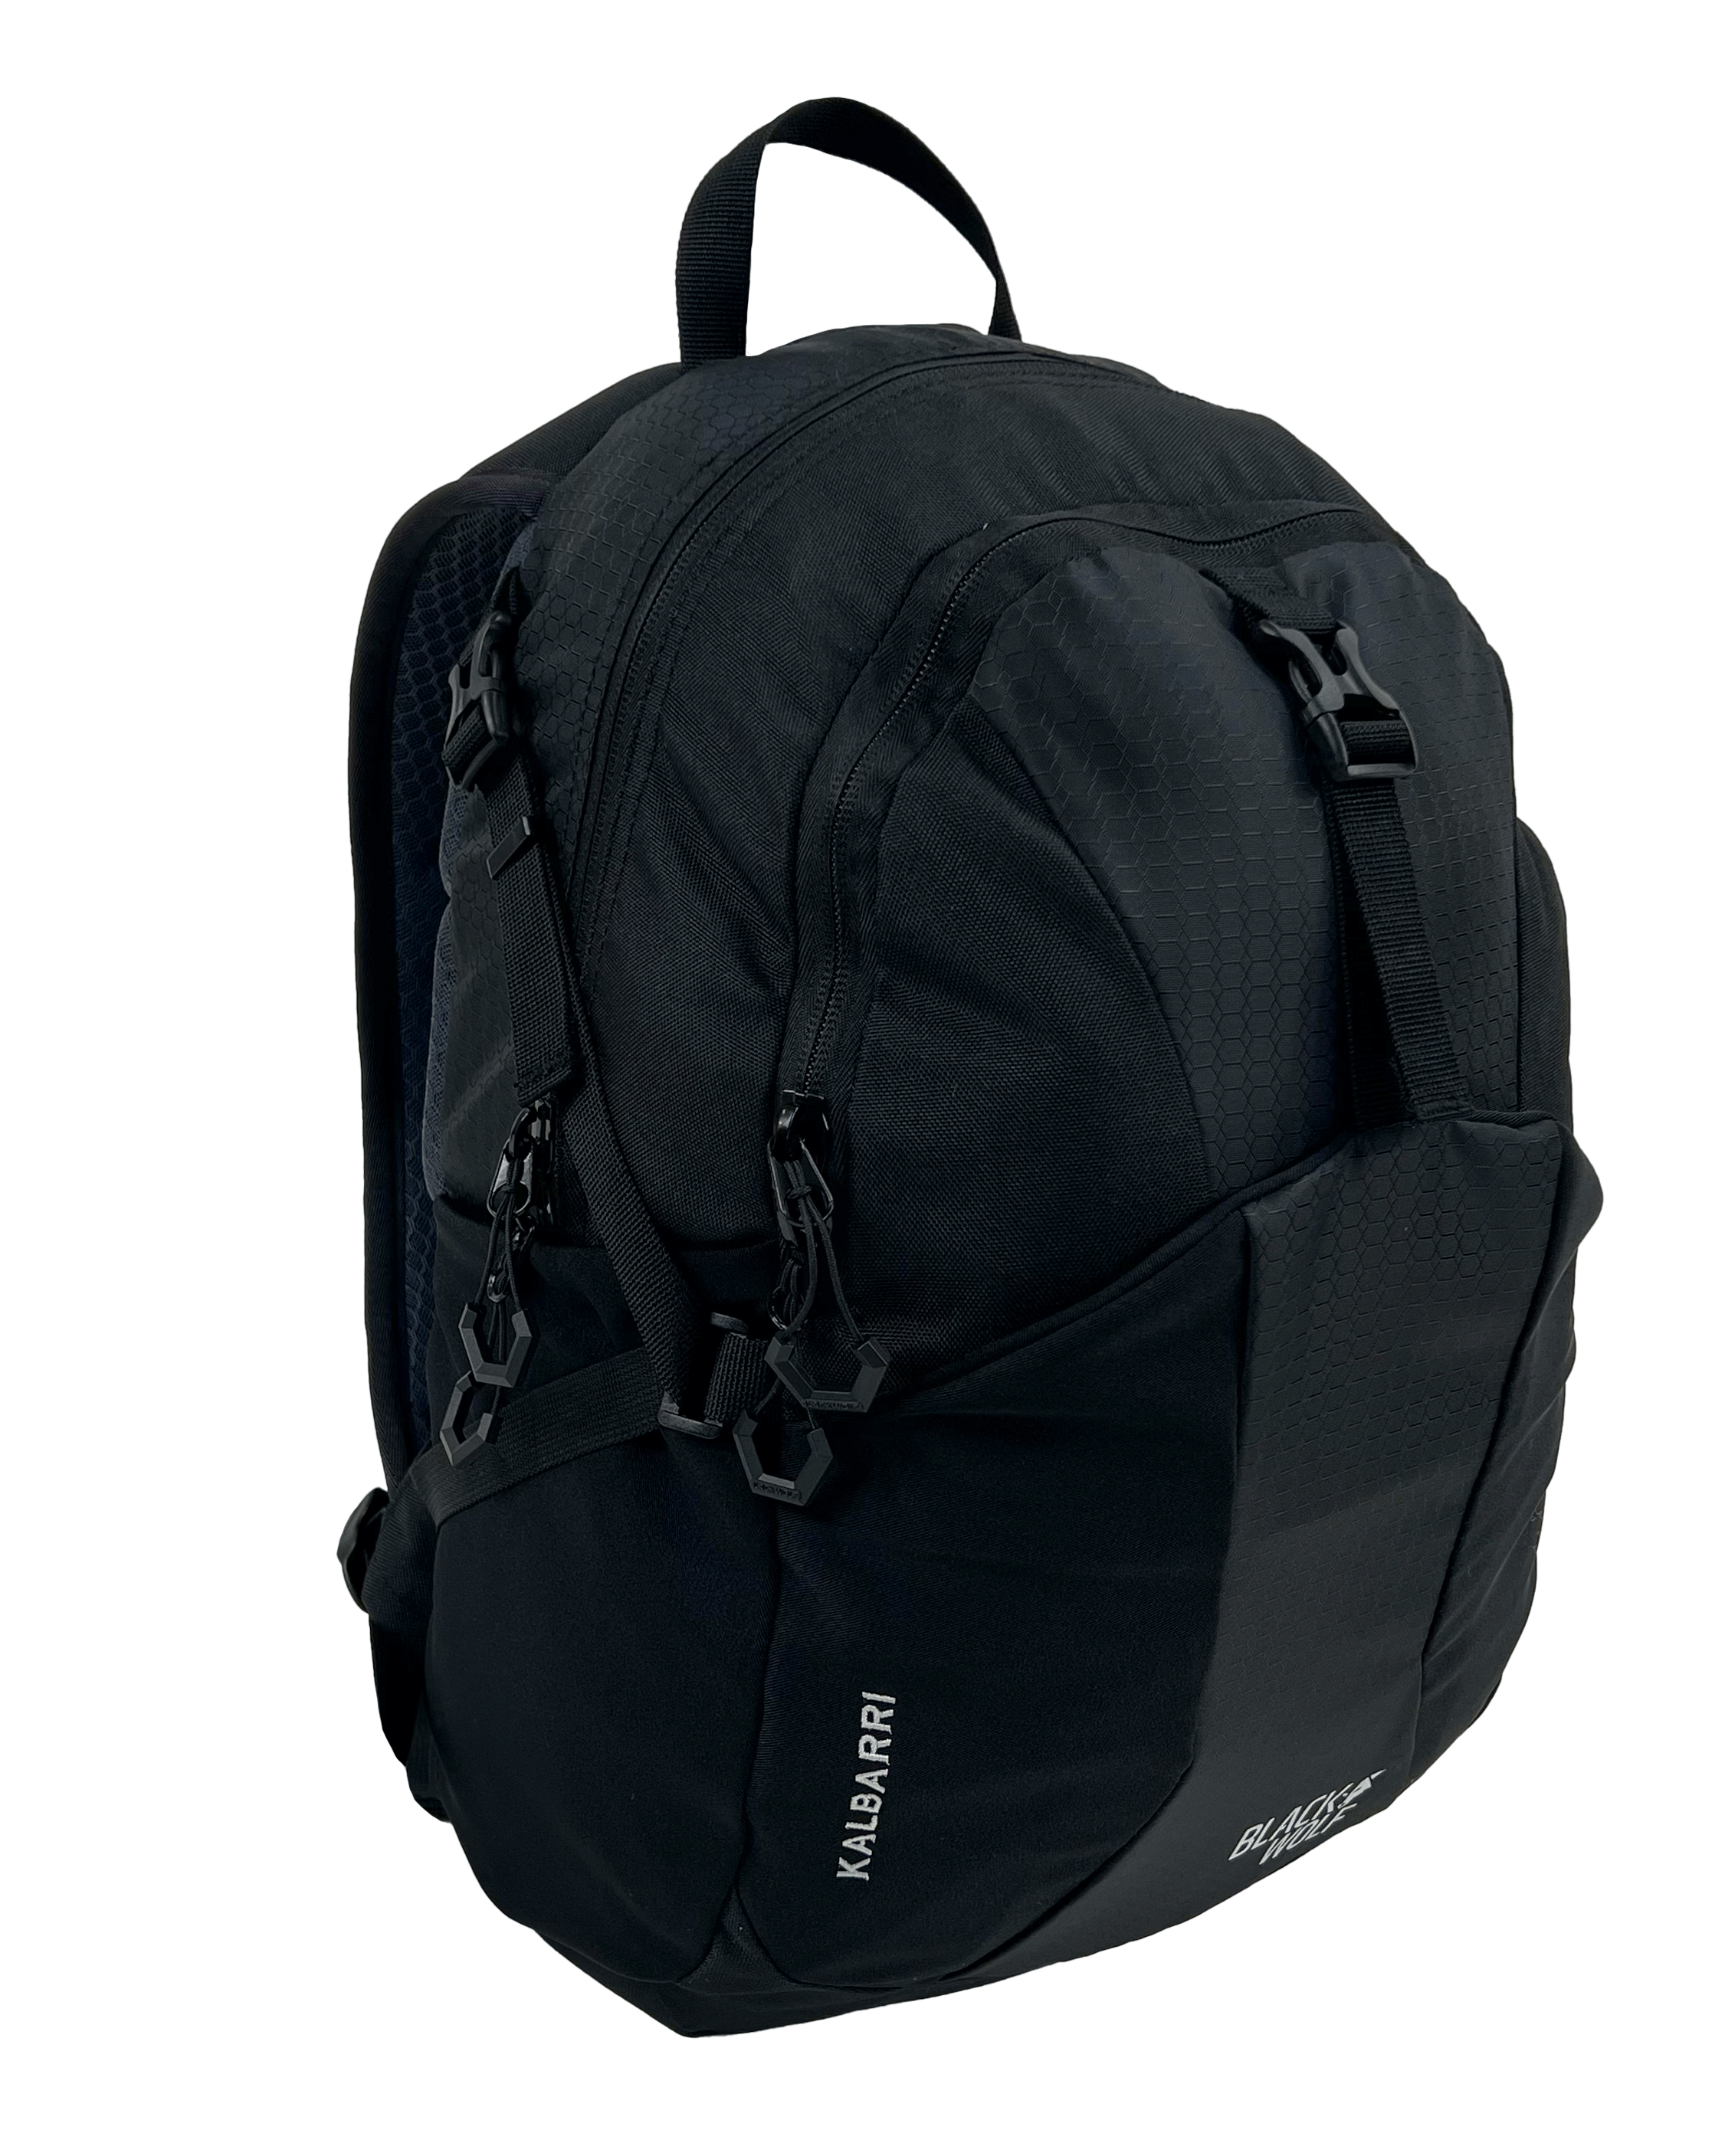 Black Wolf - Kalbarri 20L Backpack - Jet Black